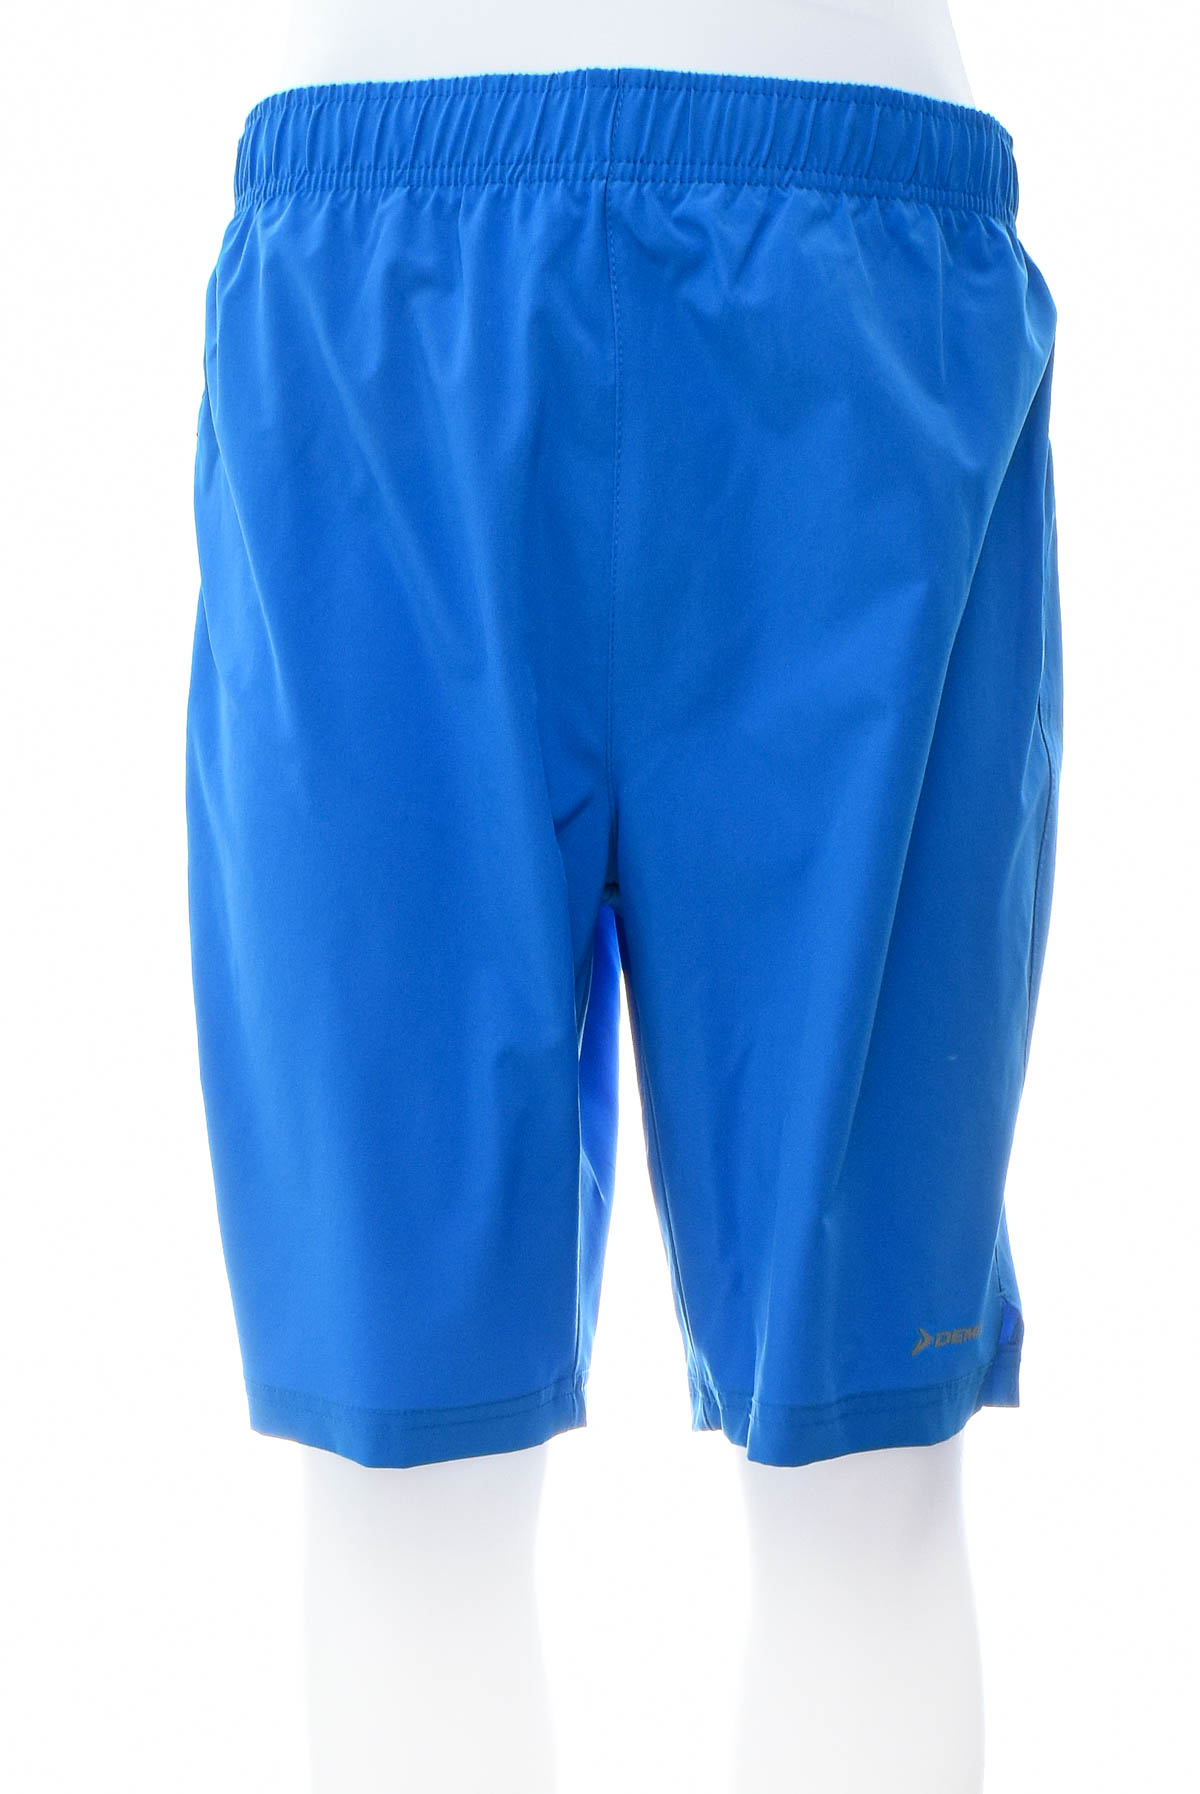 Men's shorts - Demix - 0